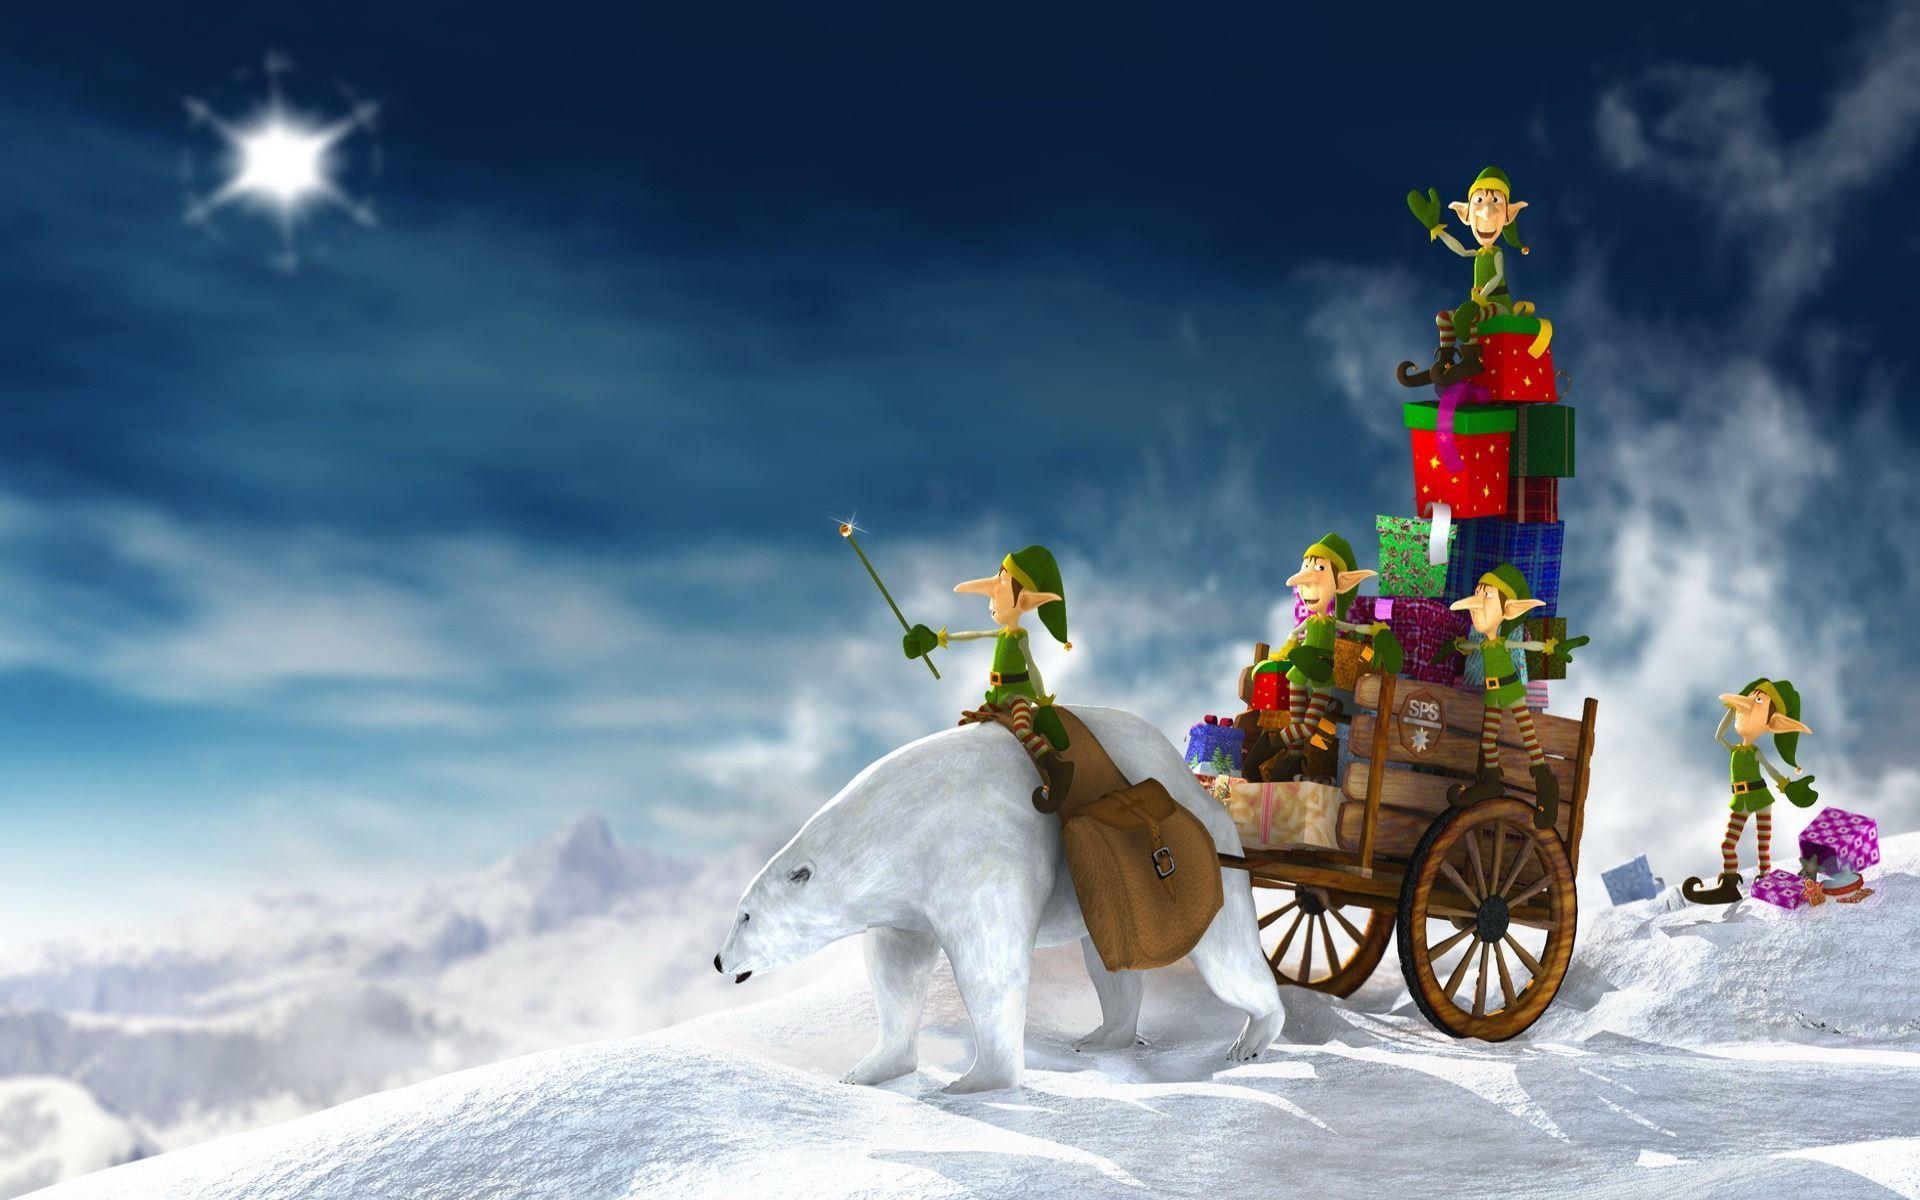 Merry Christmas HD Desktop Wallpaper 2014. Merry Christmas